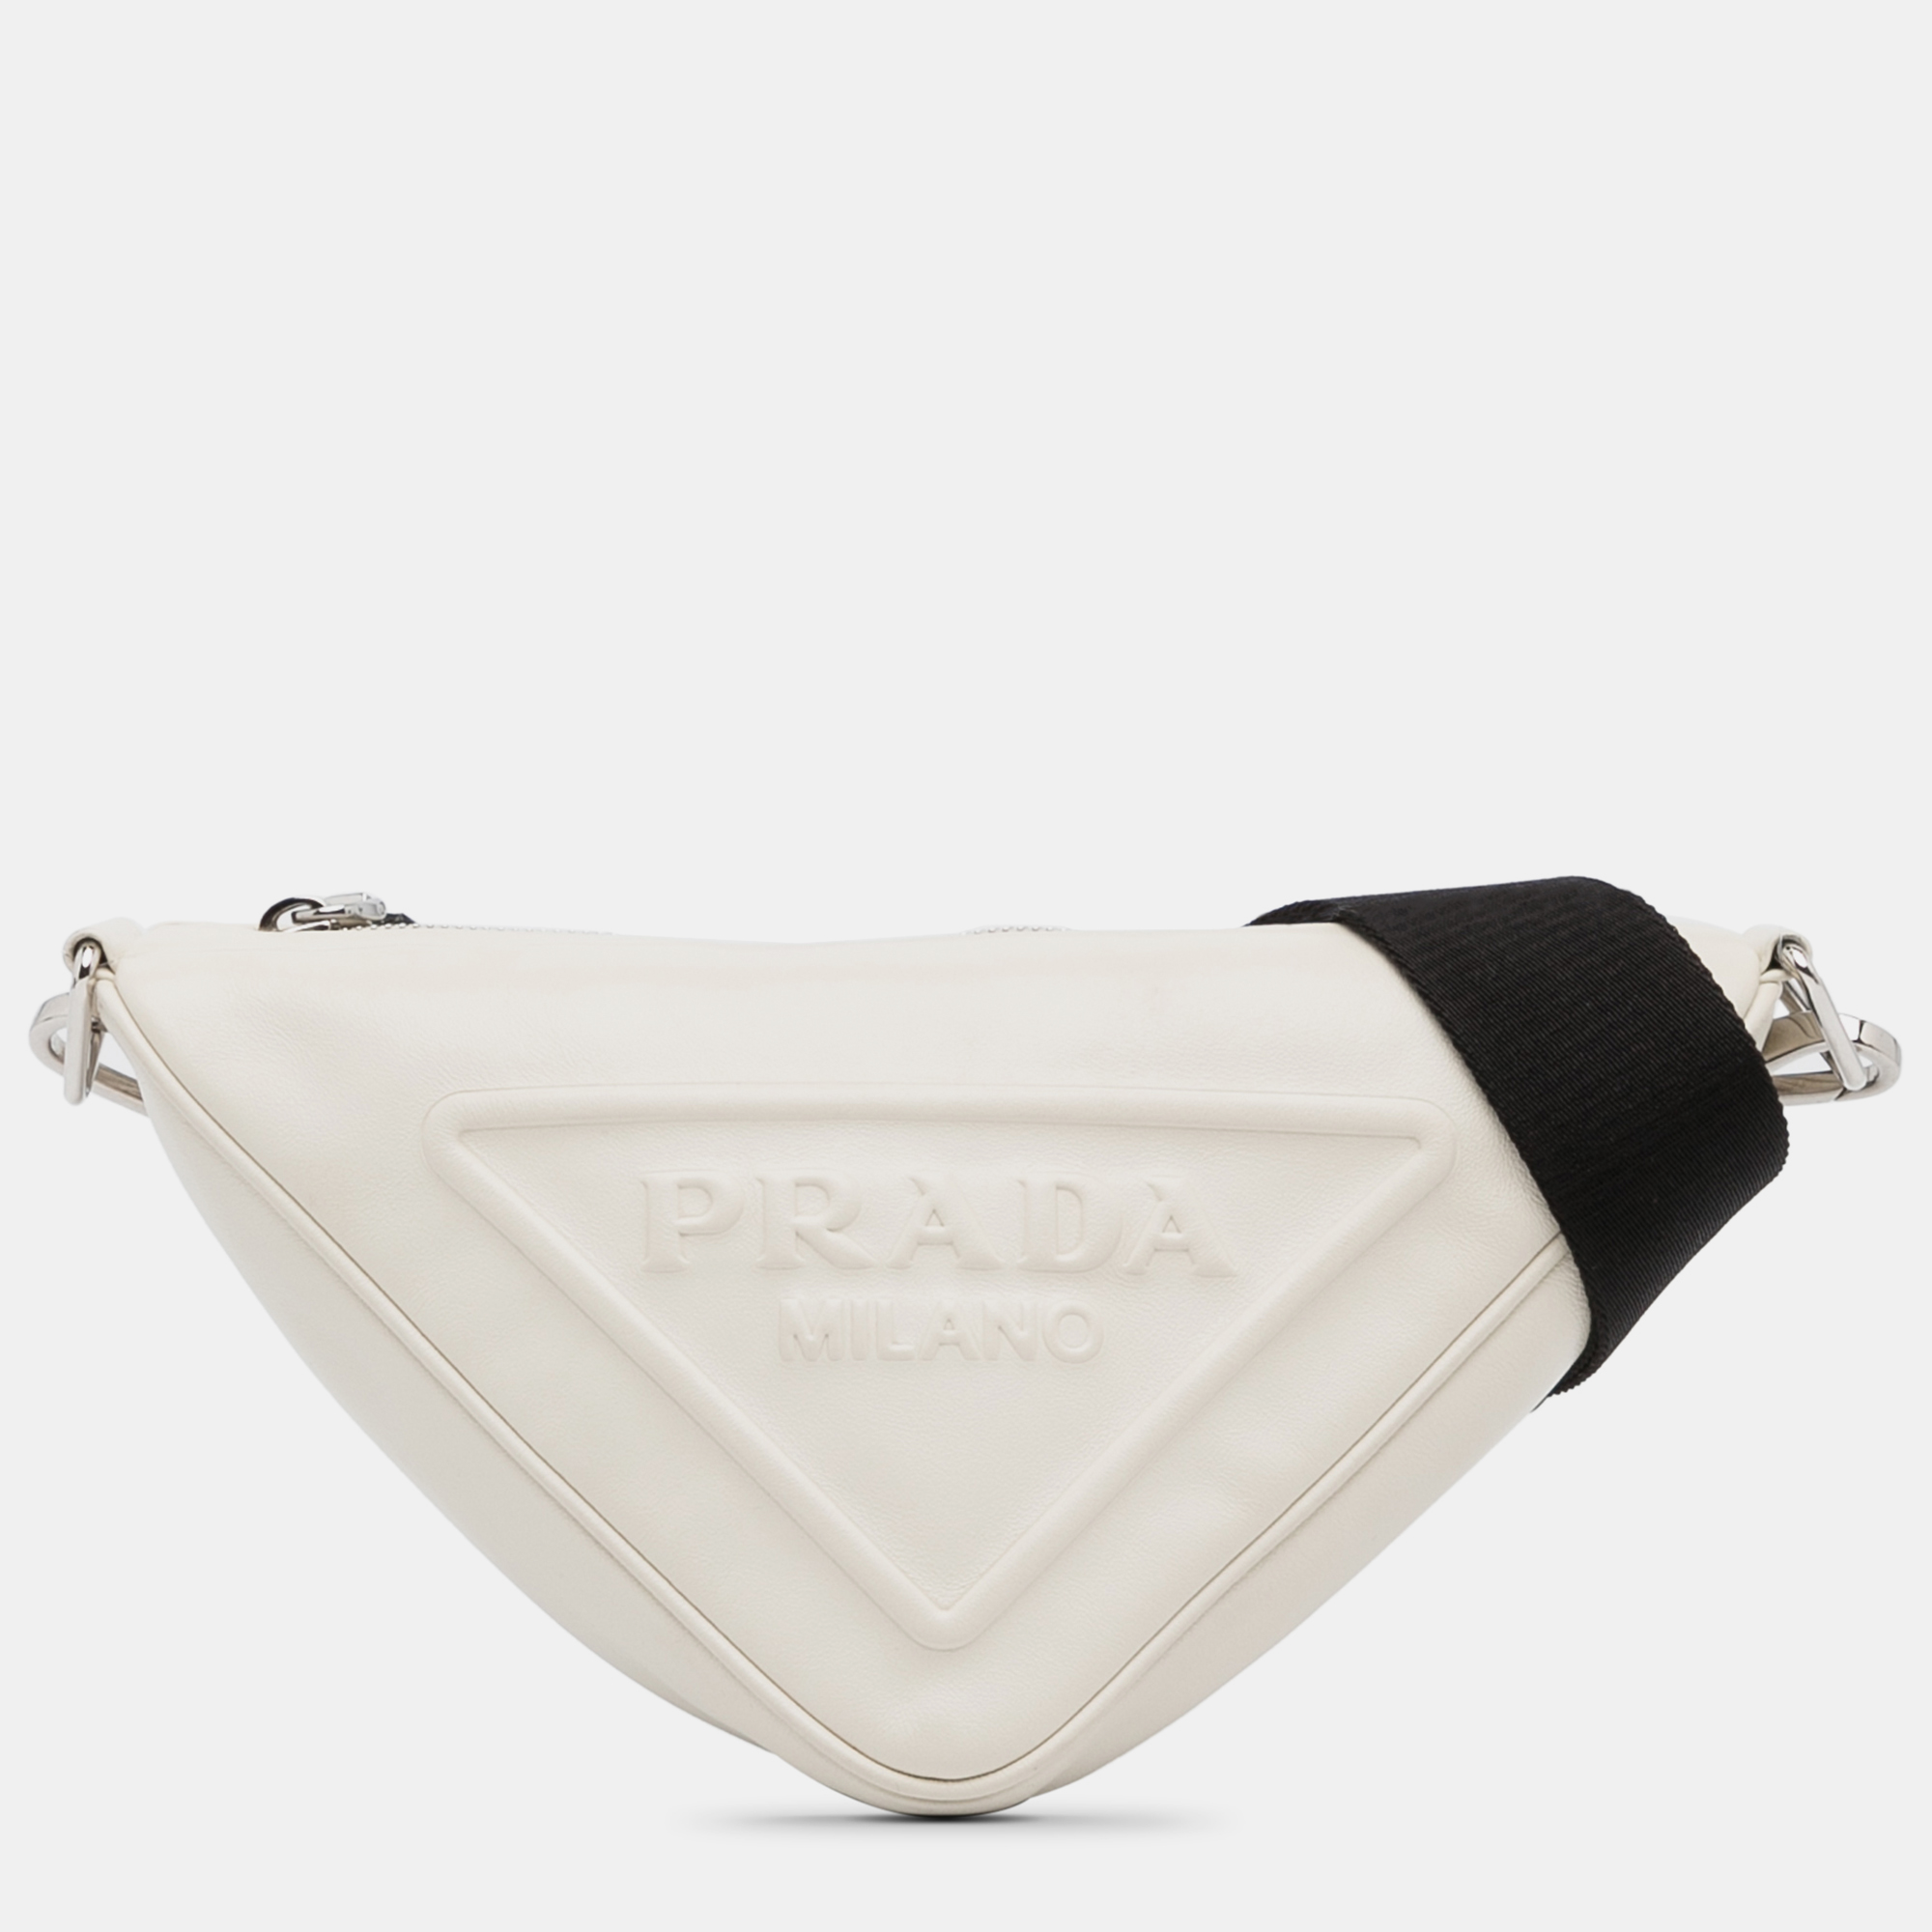 Prada grace lux triangle crossbody bag